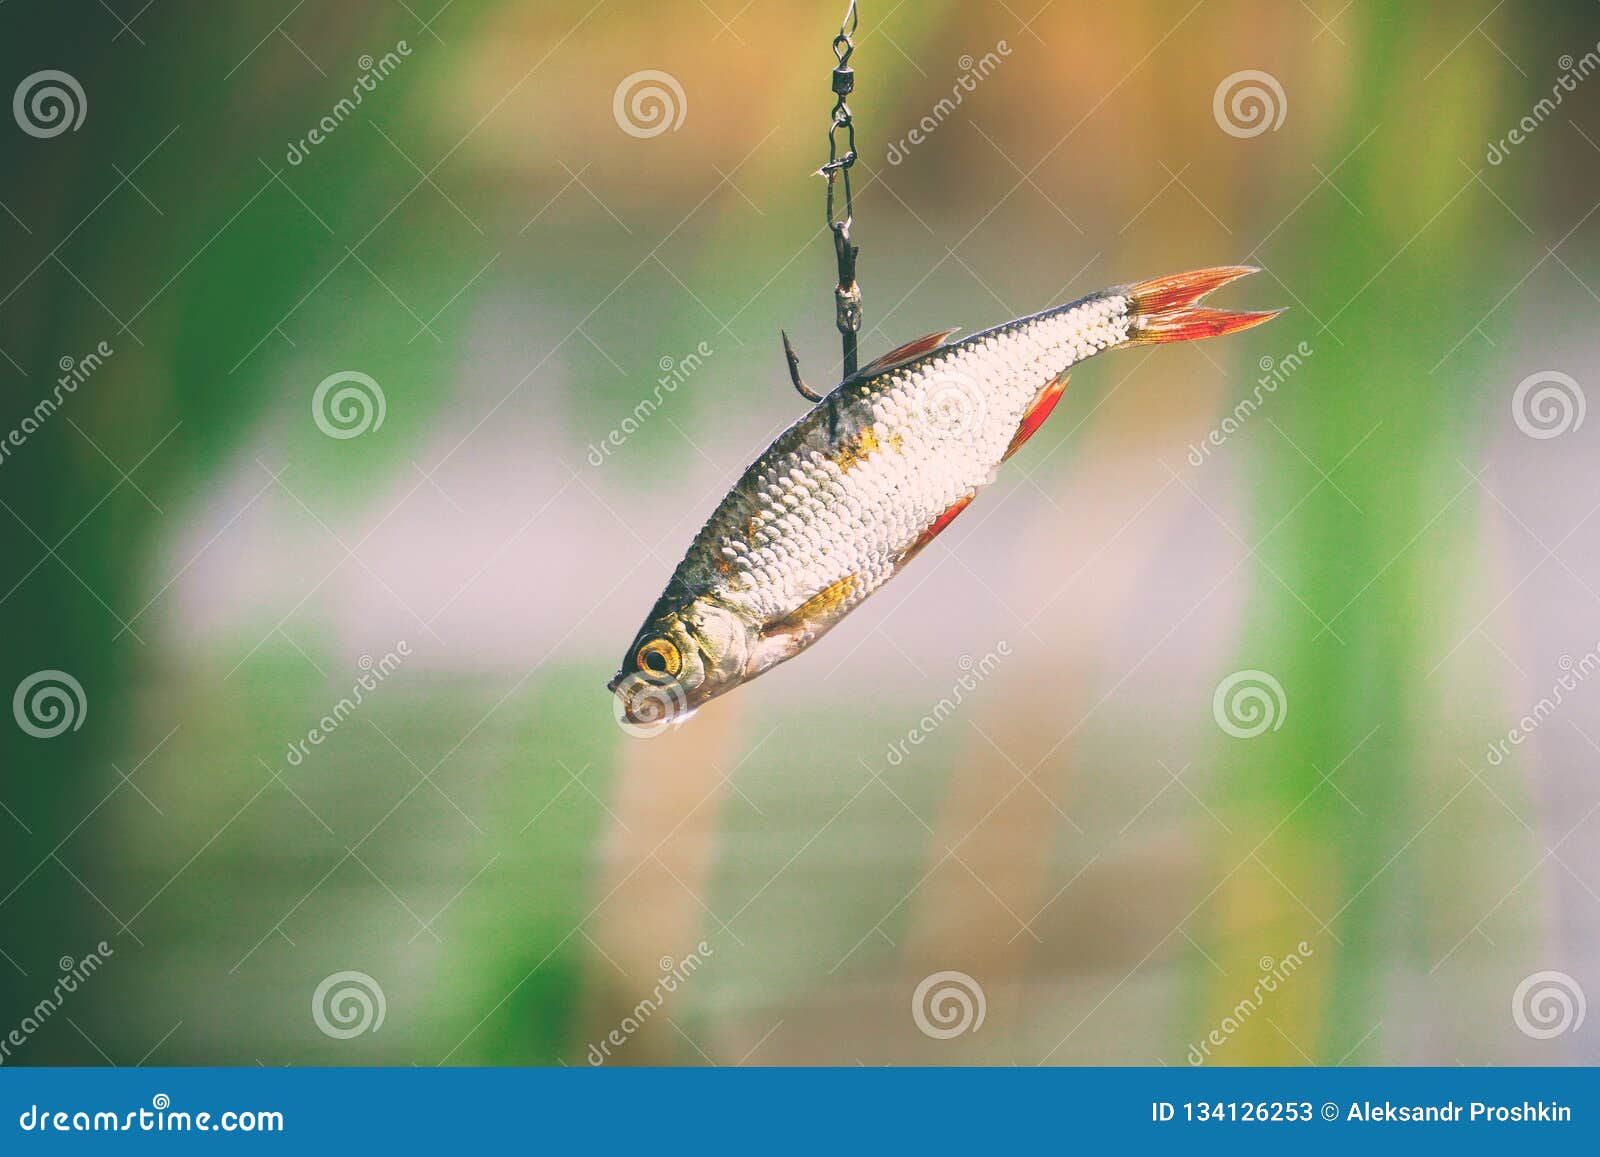 Live bait for pike fishing stock image. Image of lake - 134126253